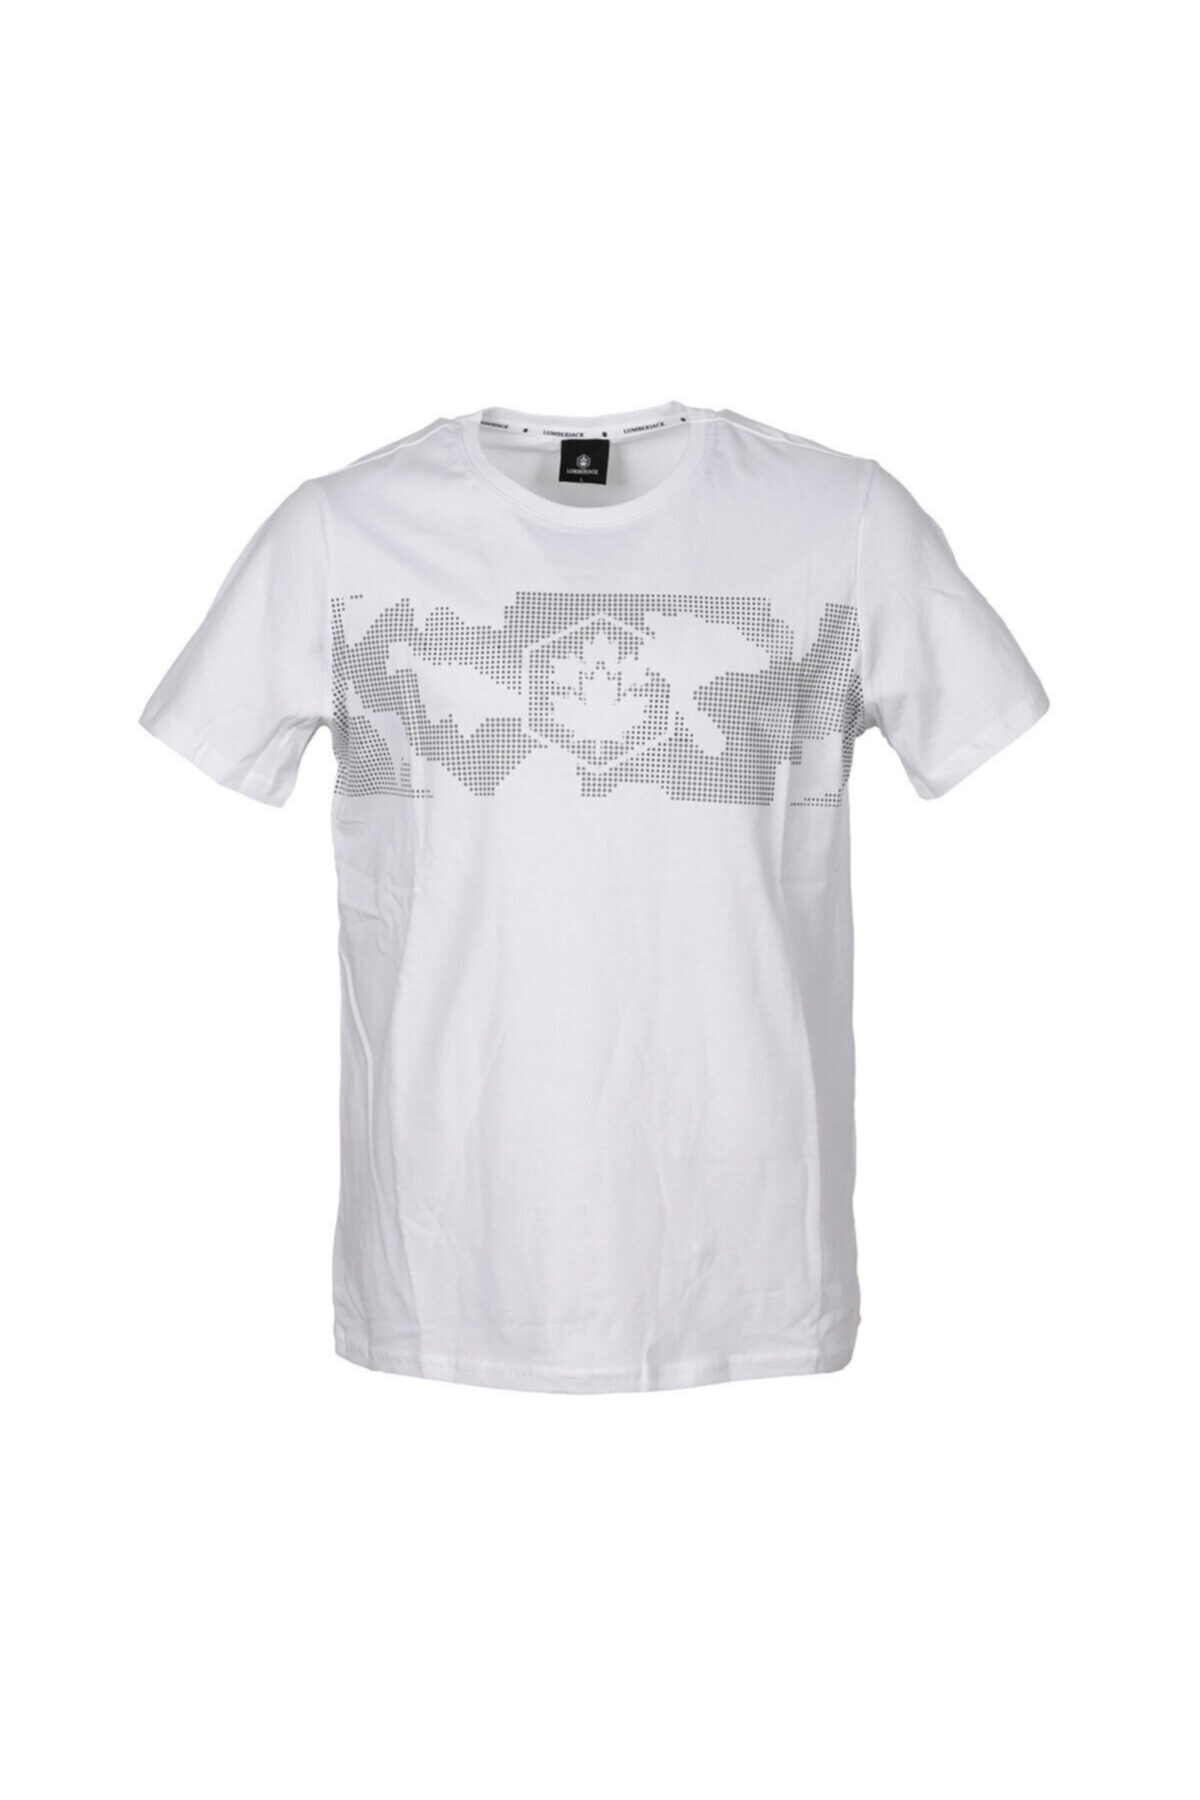 CT379 ARMY LOGO T-SHIRT Beyaz Erkek T-Shirt 100582715